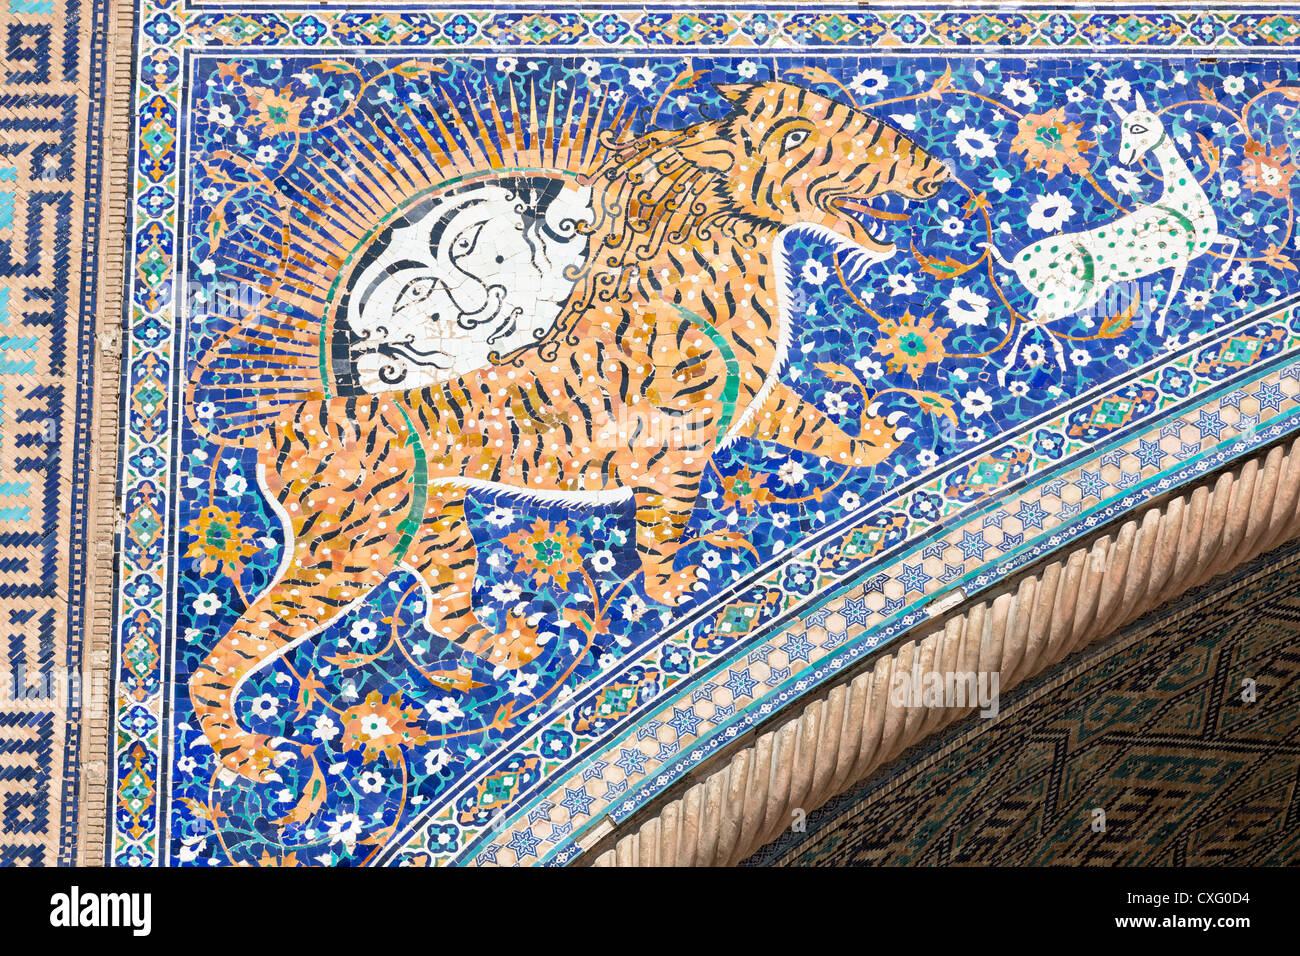 detail-of-tile-mosaic-of-lion-and-sun-shir-dar-madrasa-registan-samarqand-CXG0D4.jpg